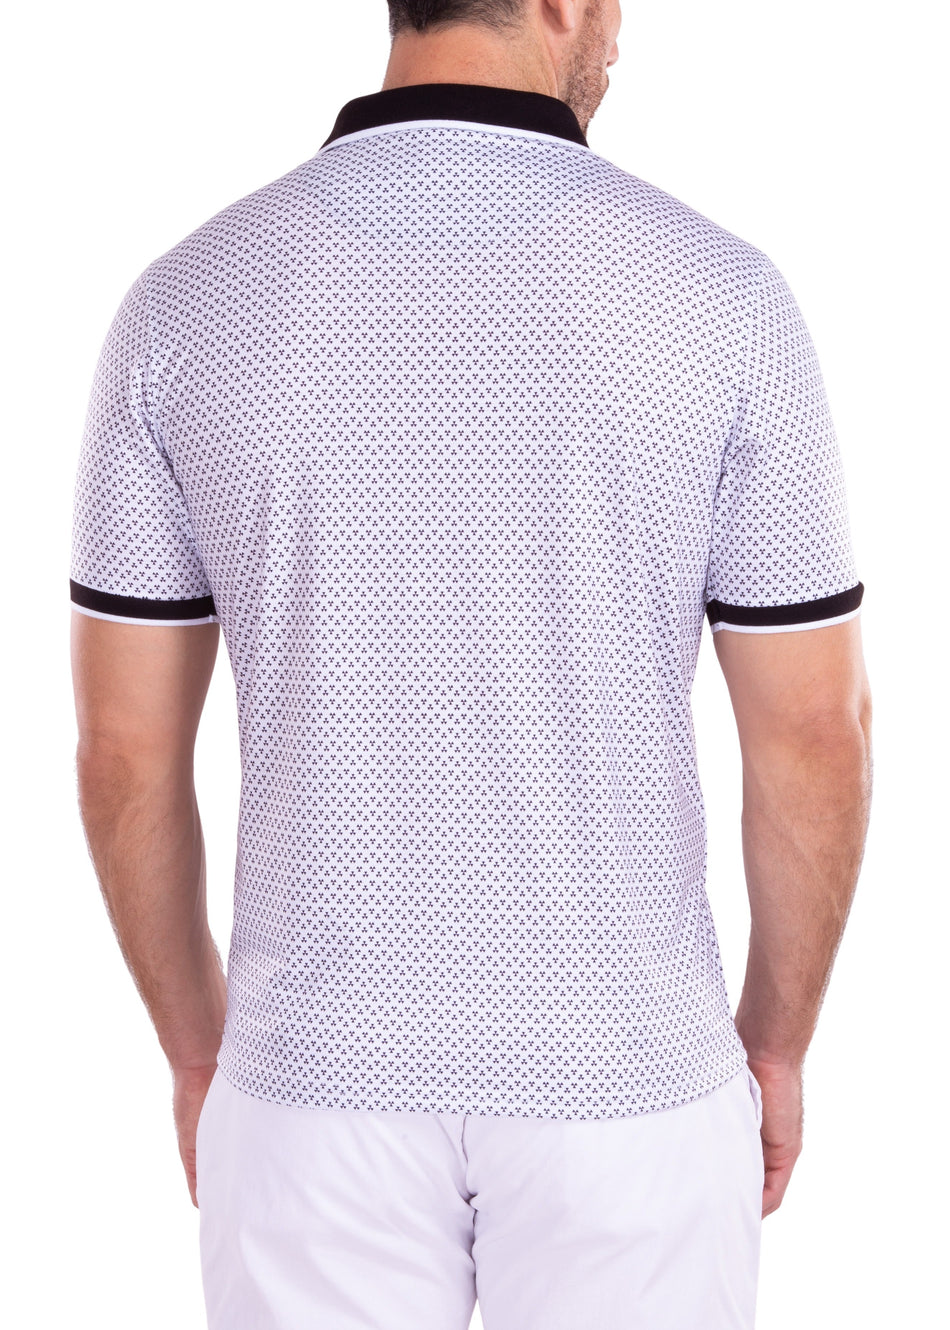 211835 - White Printed Polo Shirt